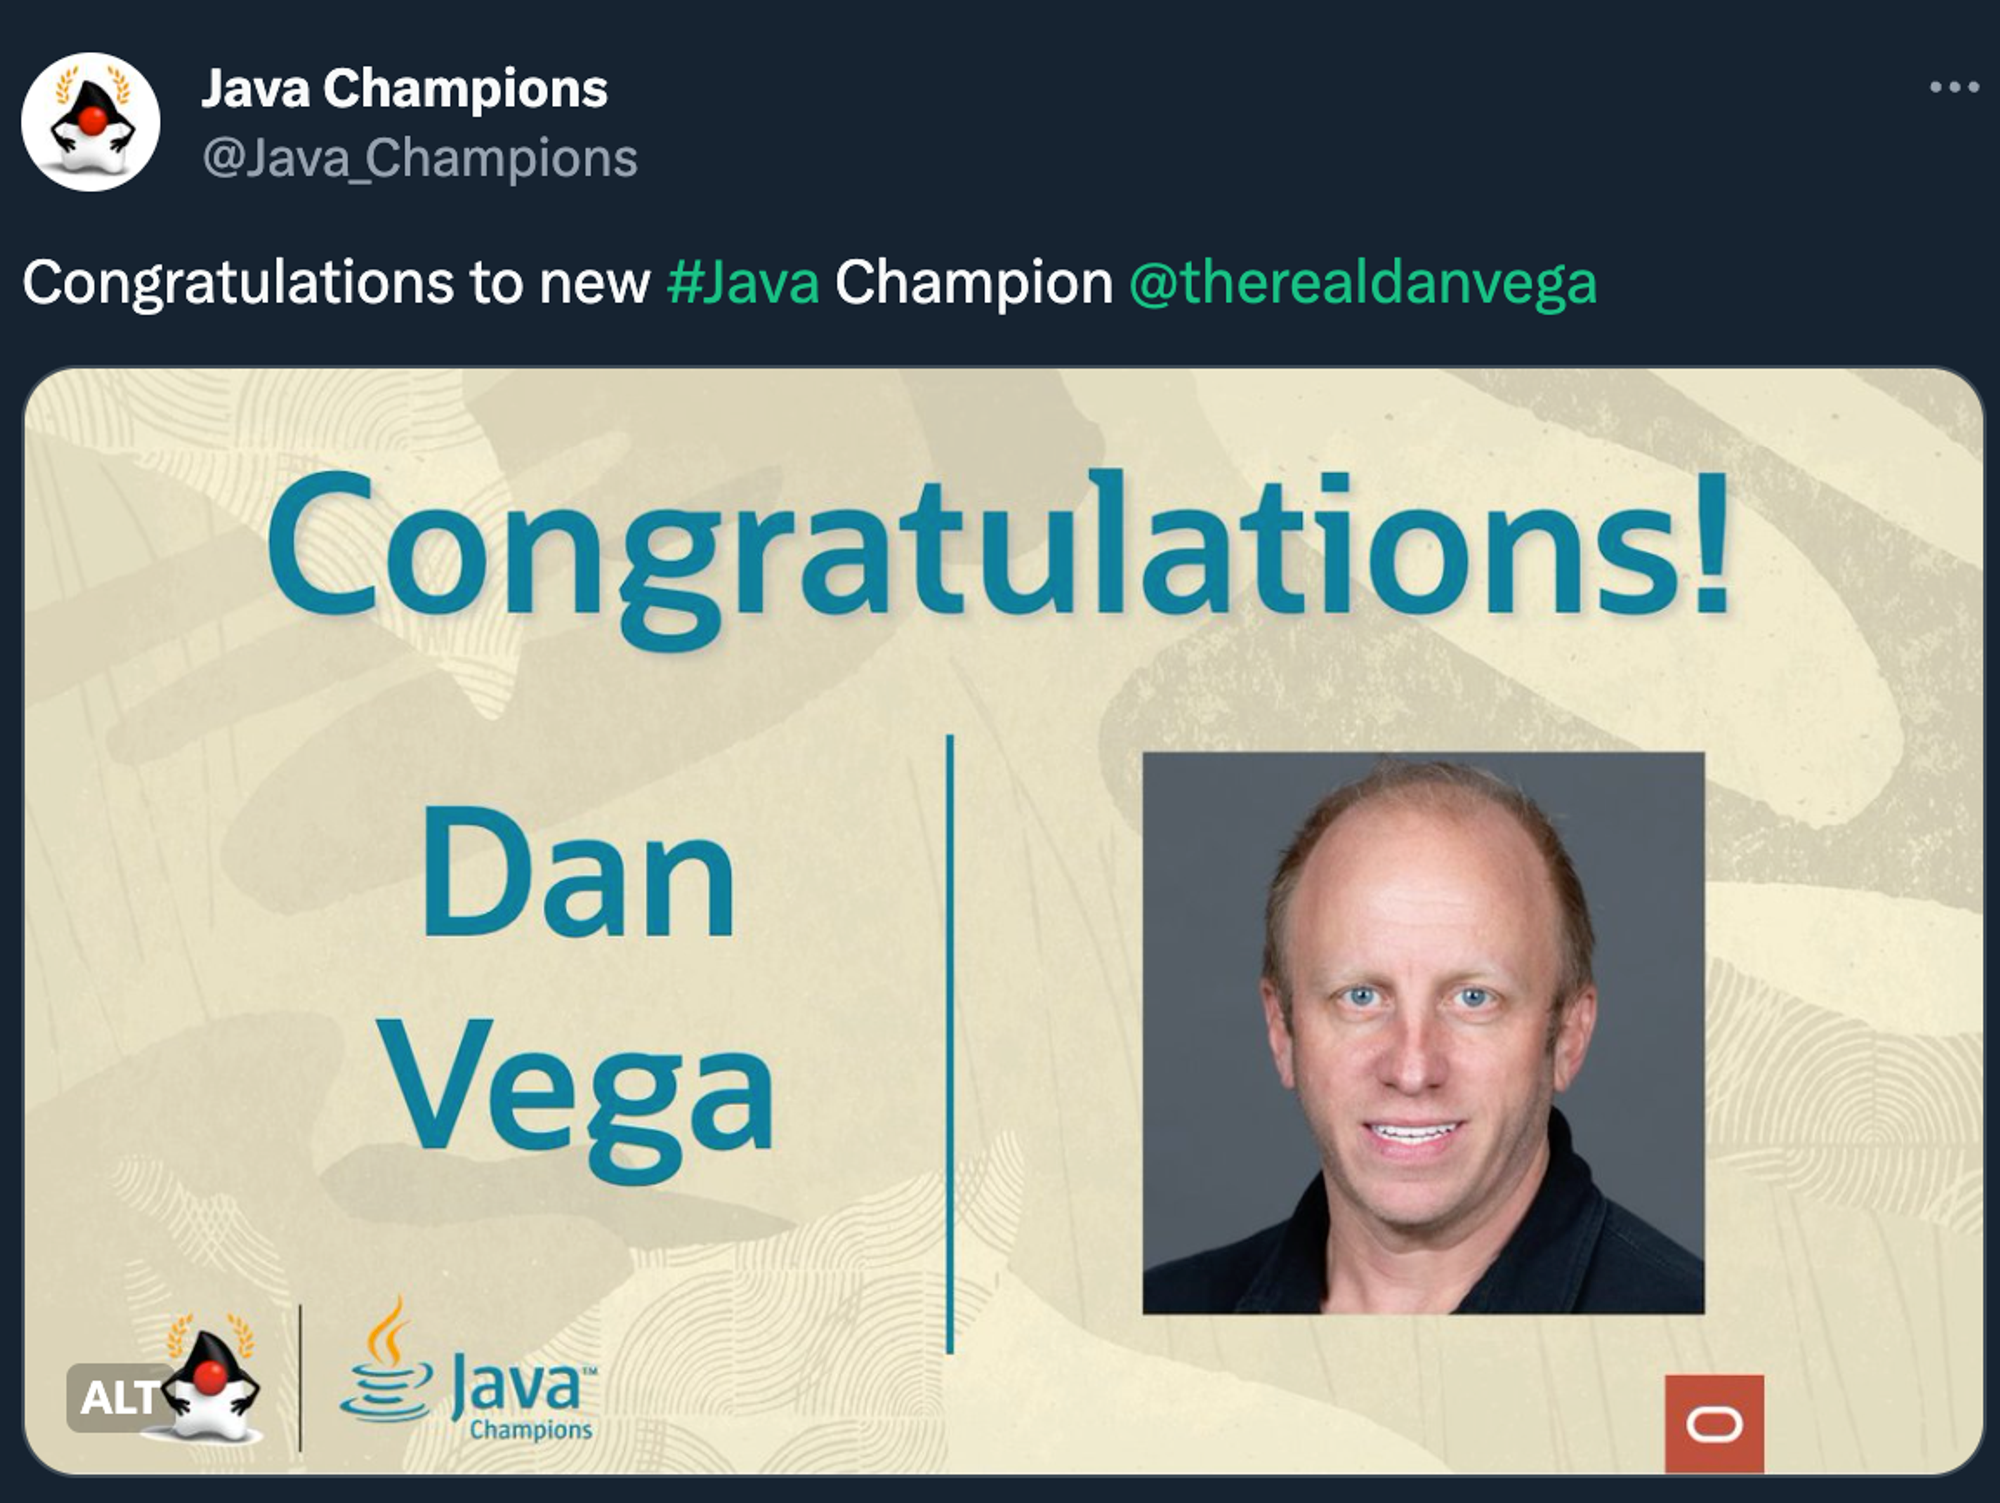 Java Champions Tweet